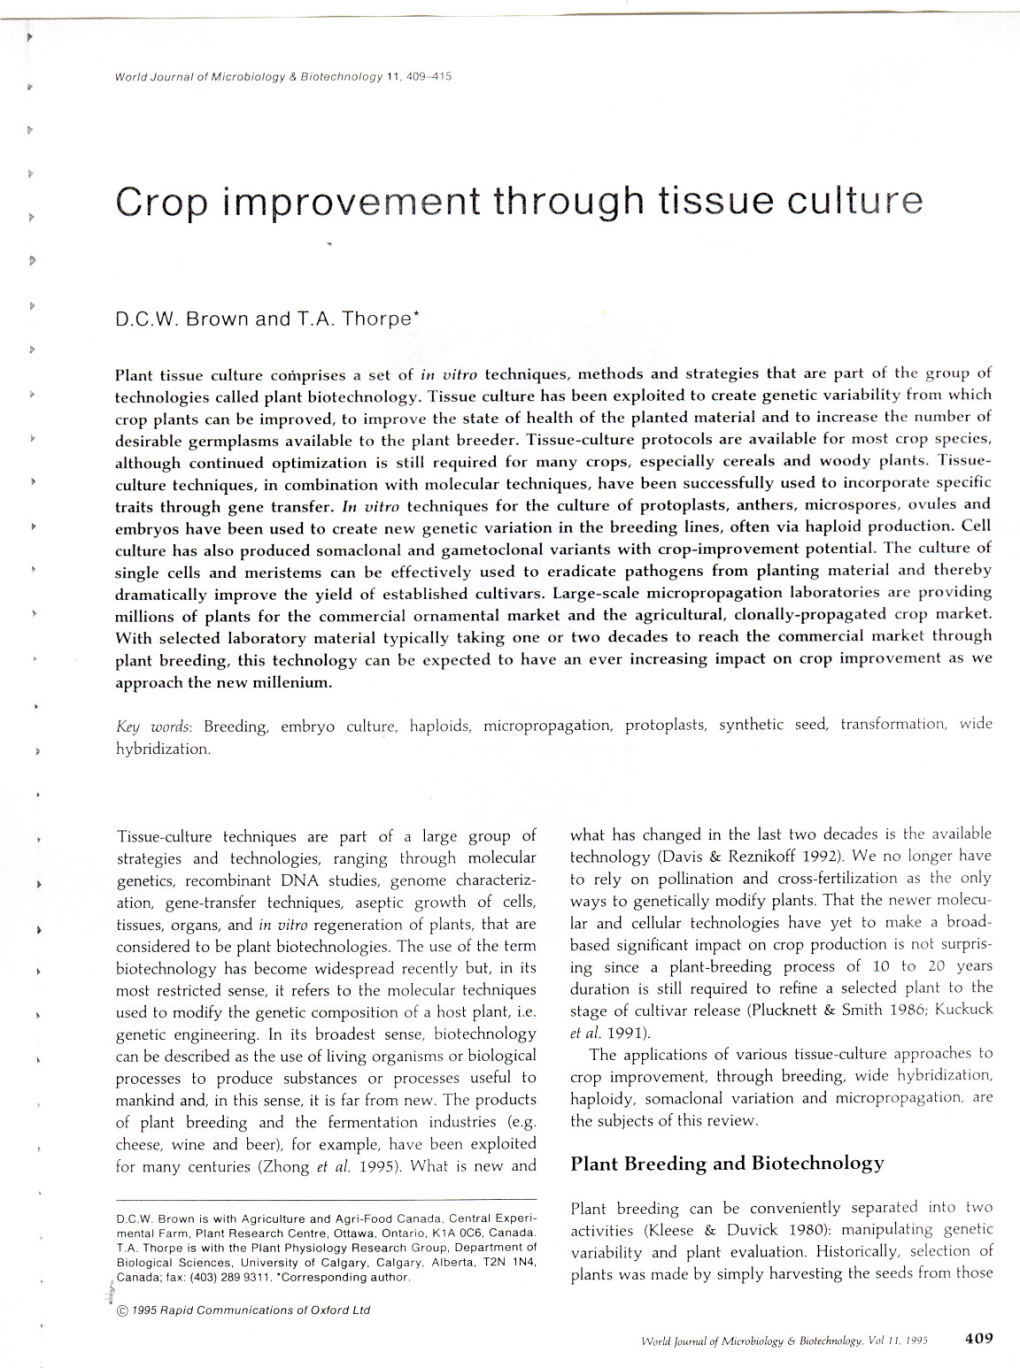 Crop Improvement Through Tissue Culture